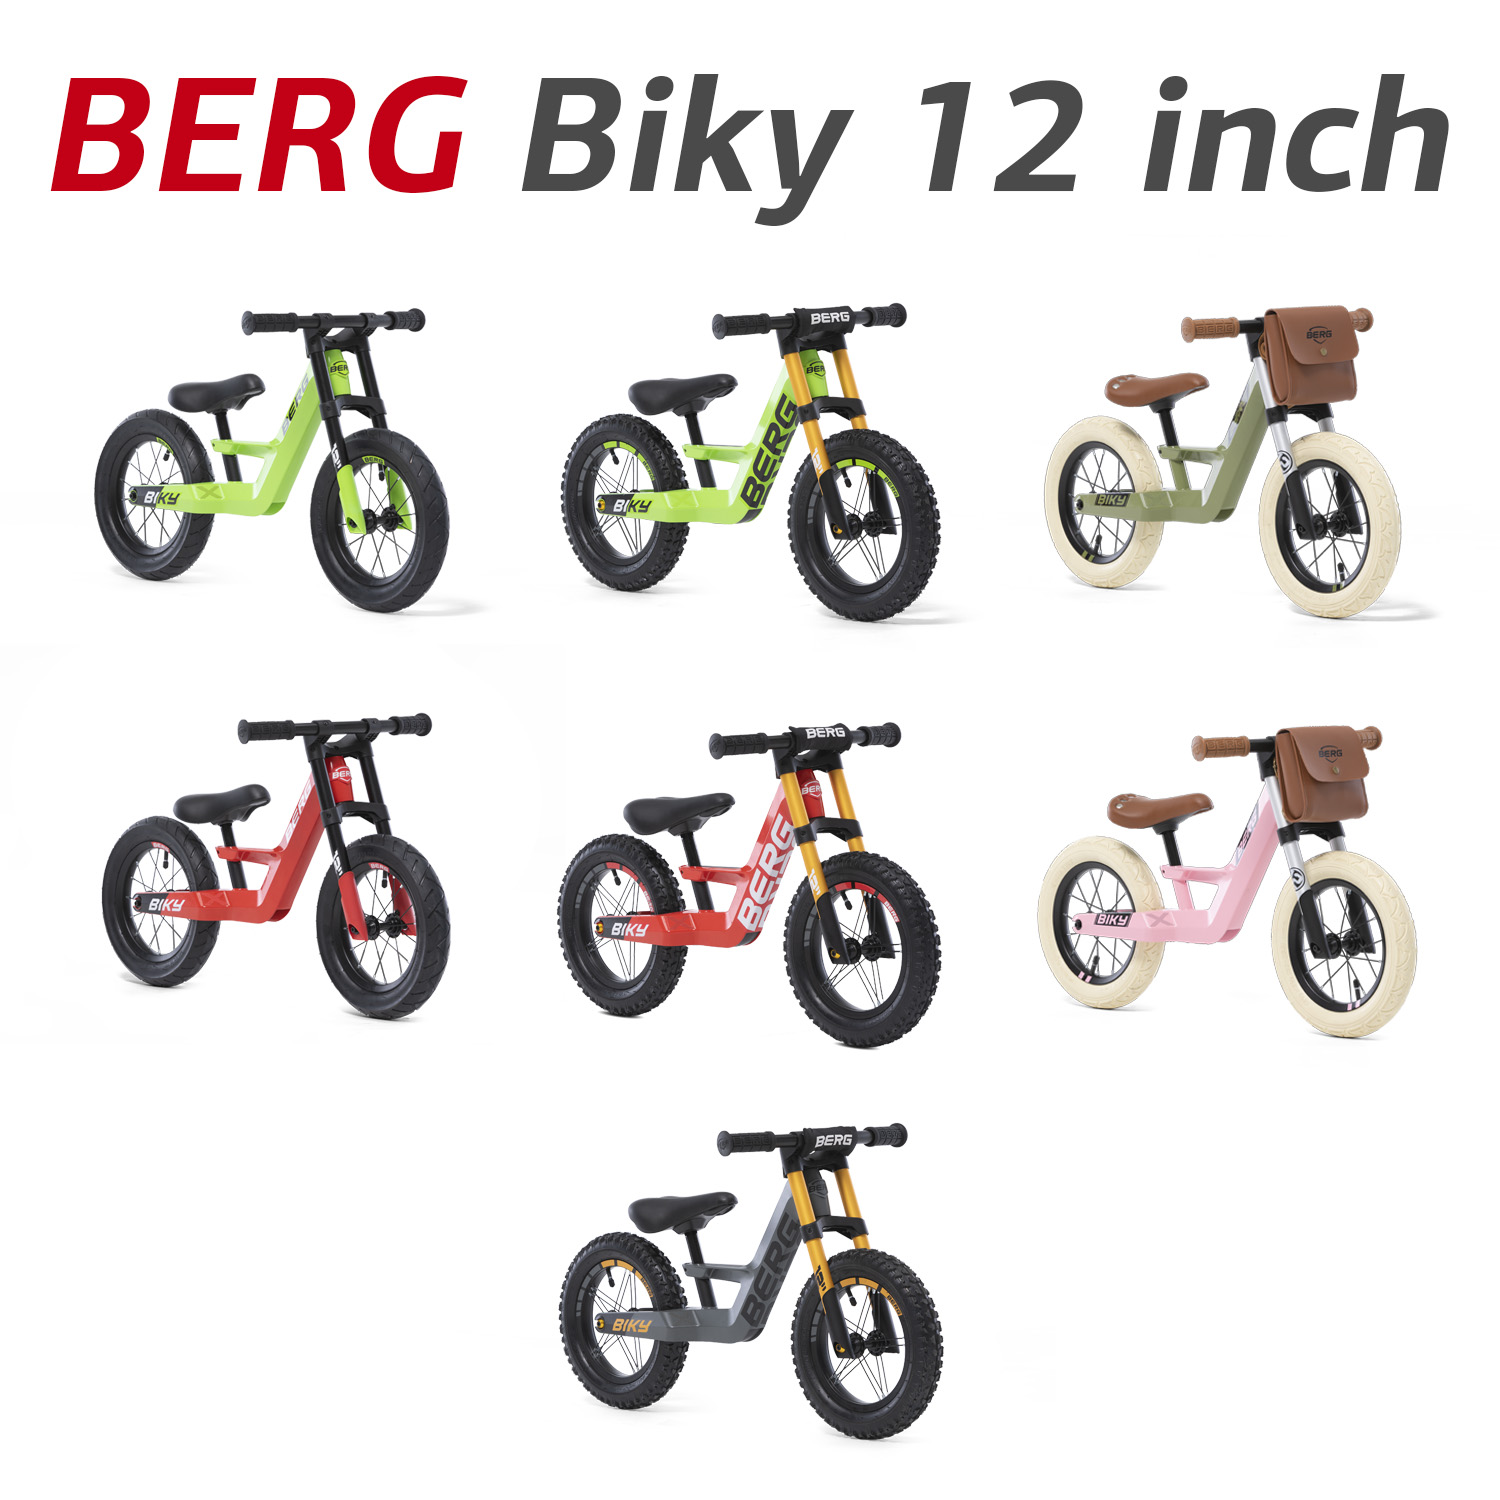 BERG Biky Modellübersicht - 12 Zoll Räder - gokart-profi.de